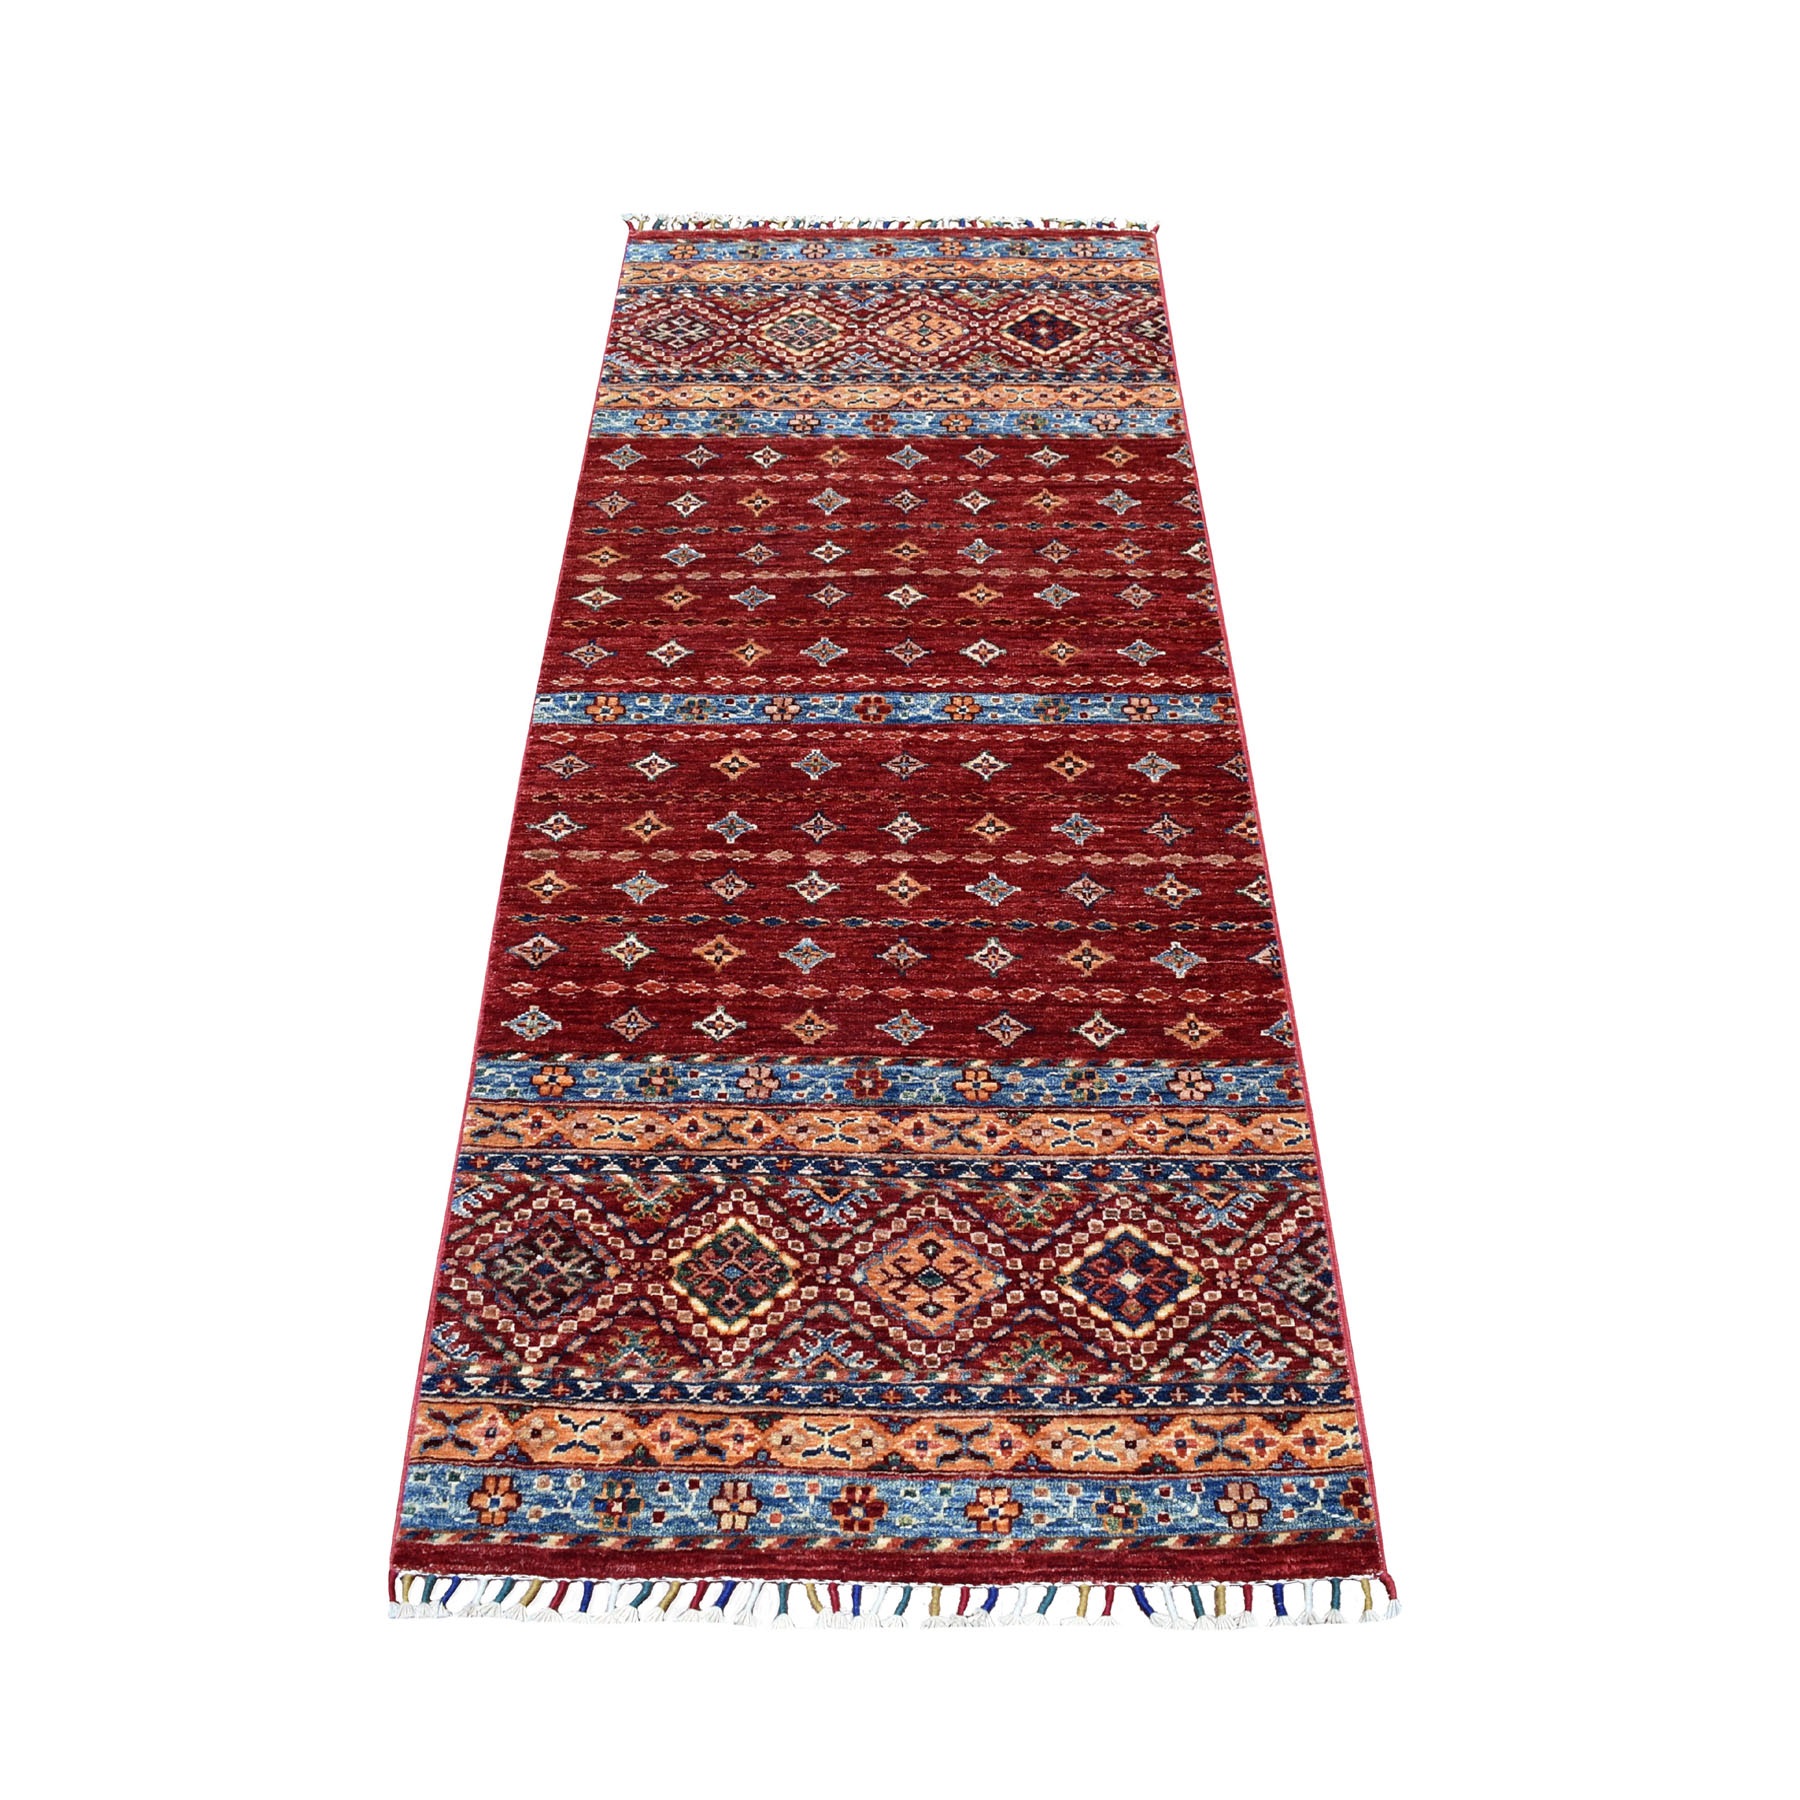 2'7"x6'4" Khorjin Design Runner Red Super Kazak Geometric Pure Wool Hand Woven Oriental Rug 